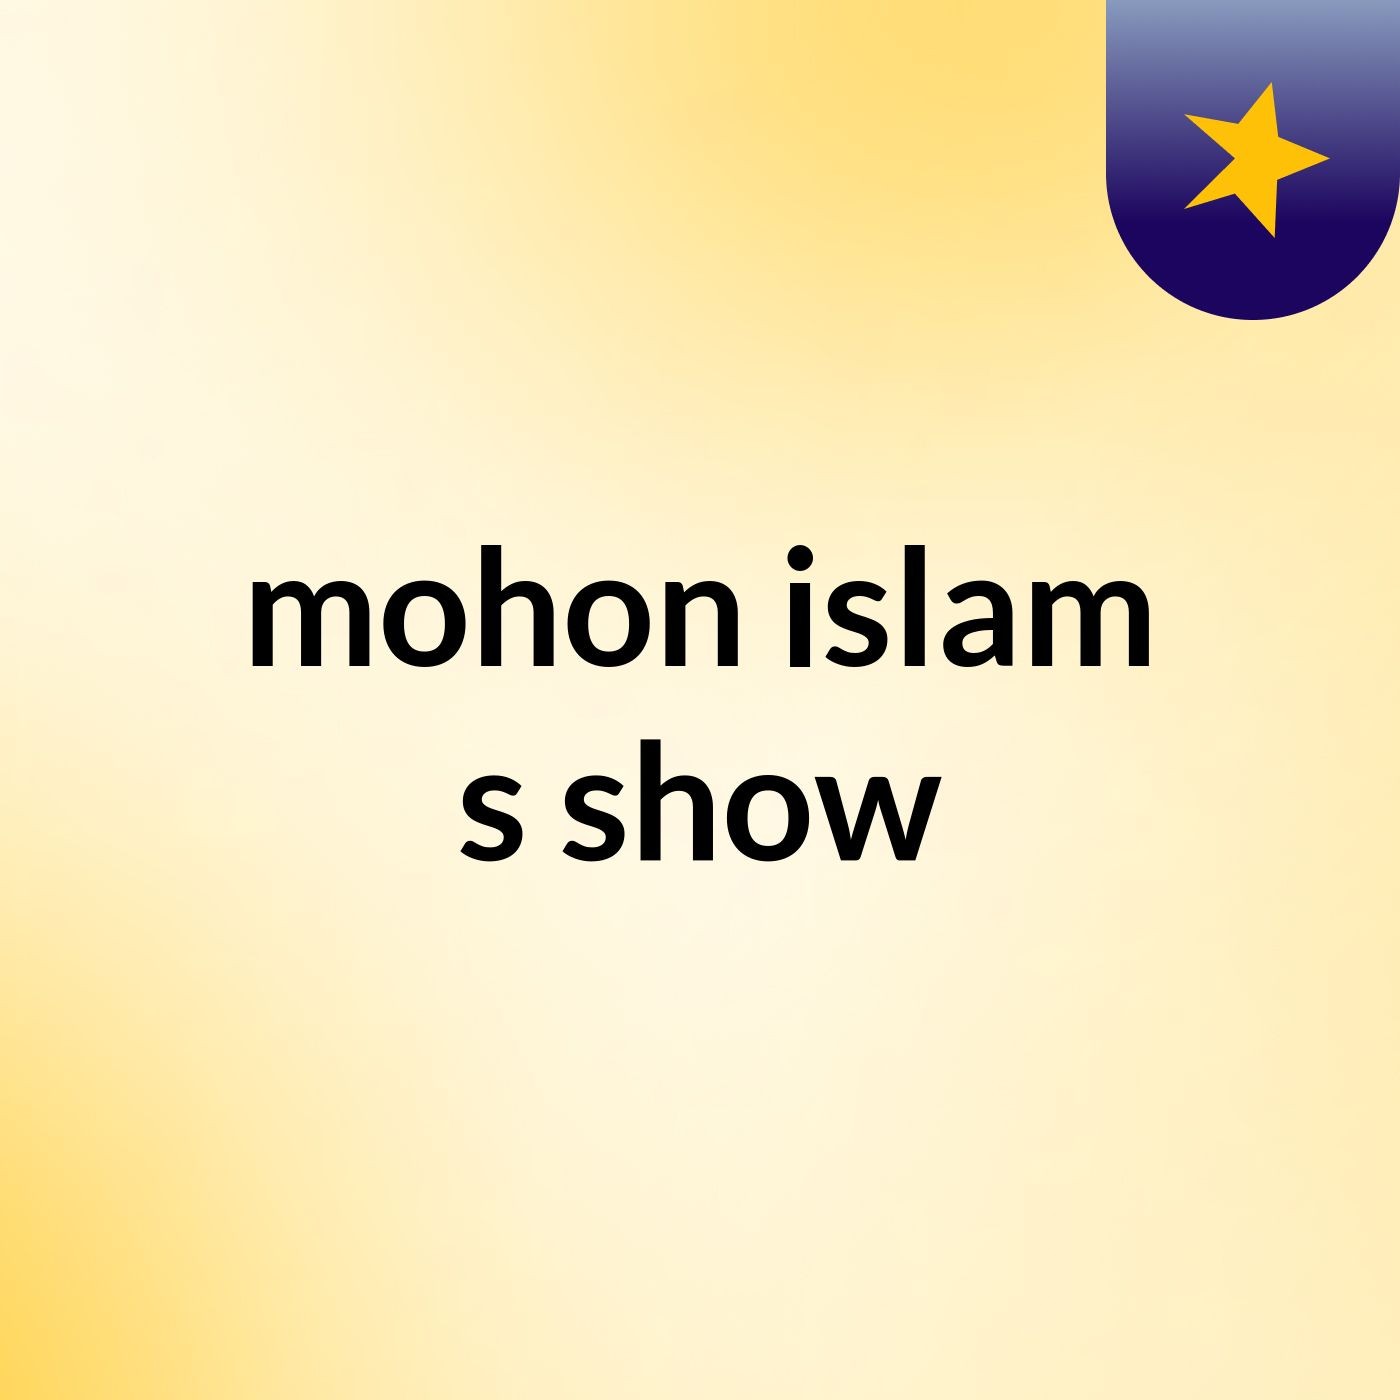 mohon islam's show